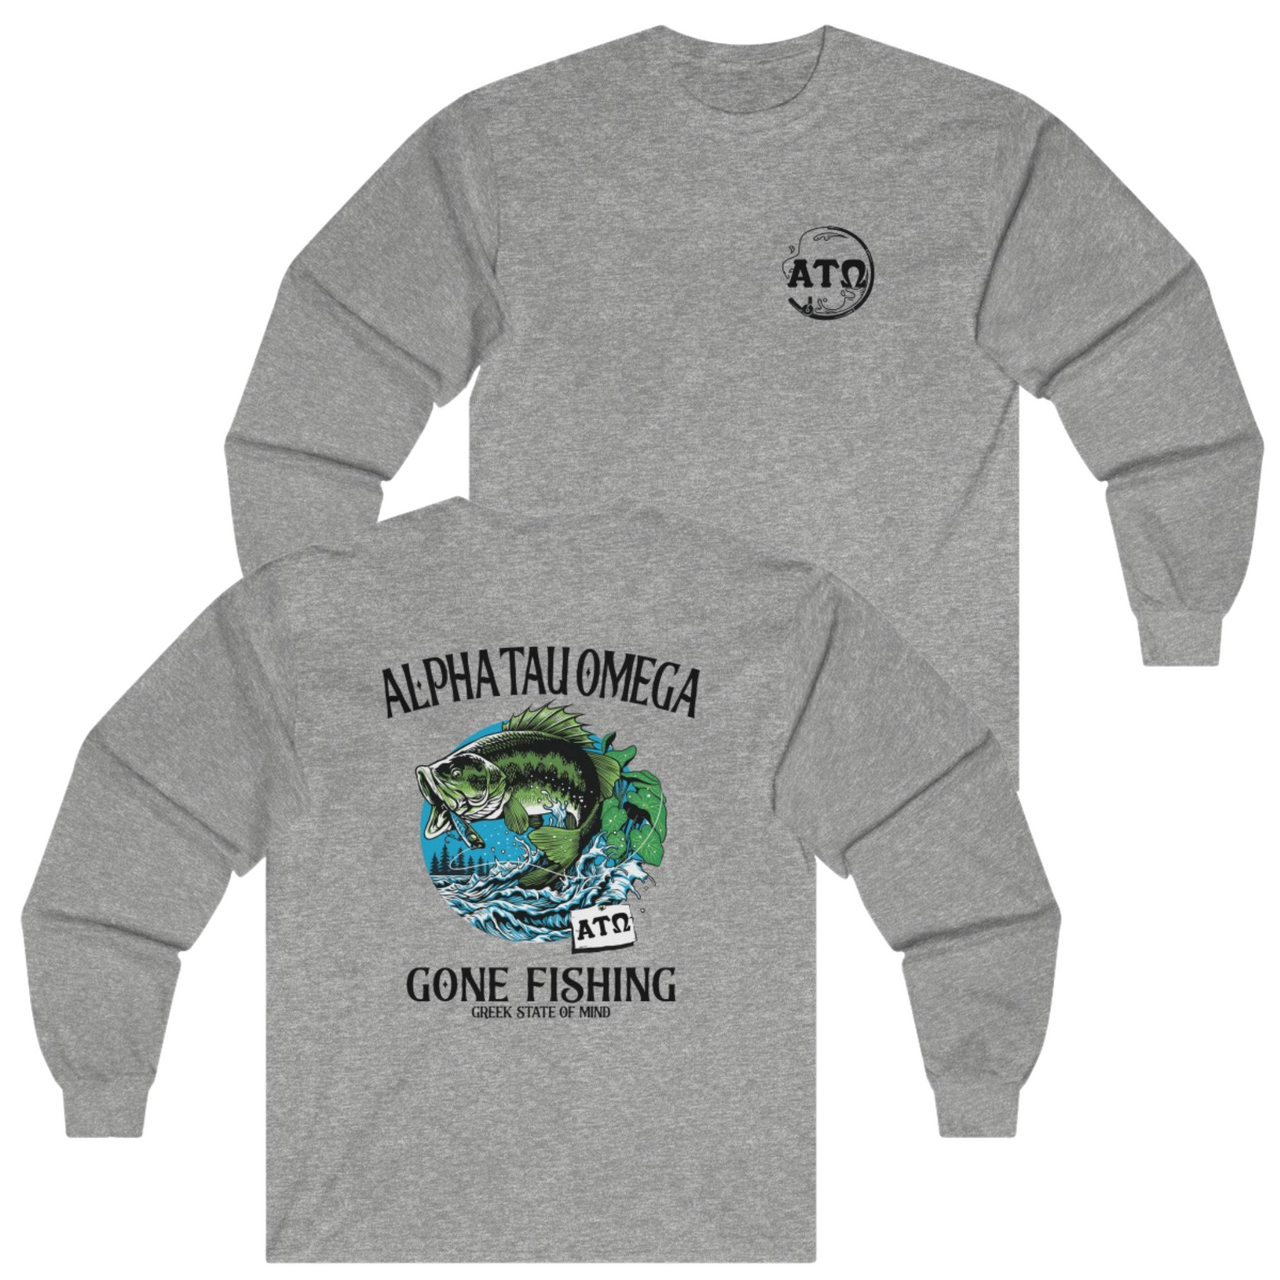 Grey Alpha Tau Omega Graphic Long Sleeve T-Shirt | Gone Fishing | Alpha Tau Omega Fraternity Merch 